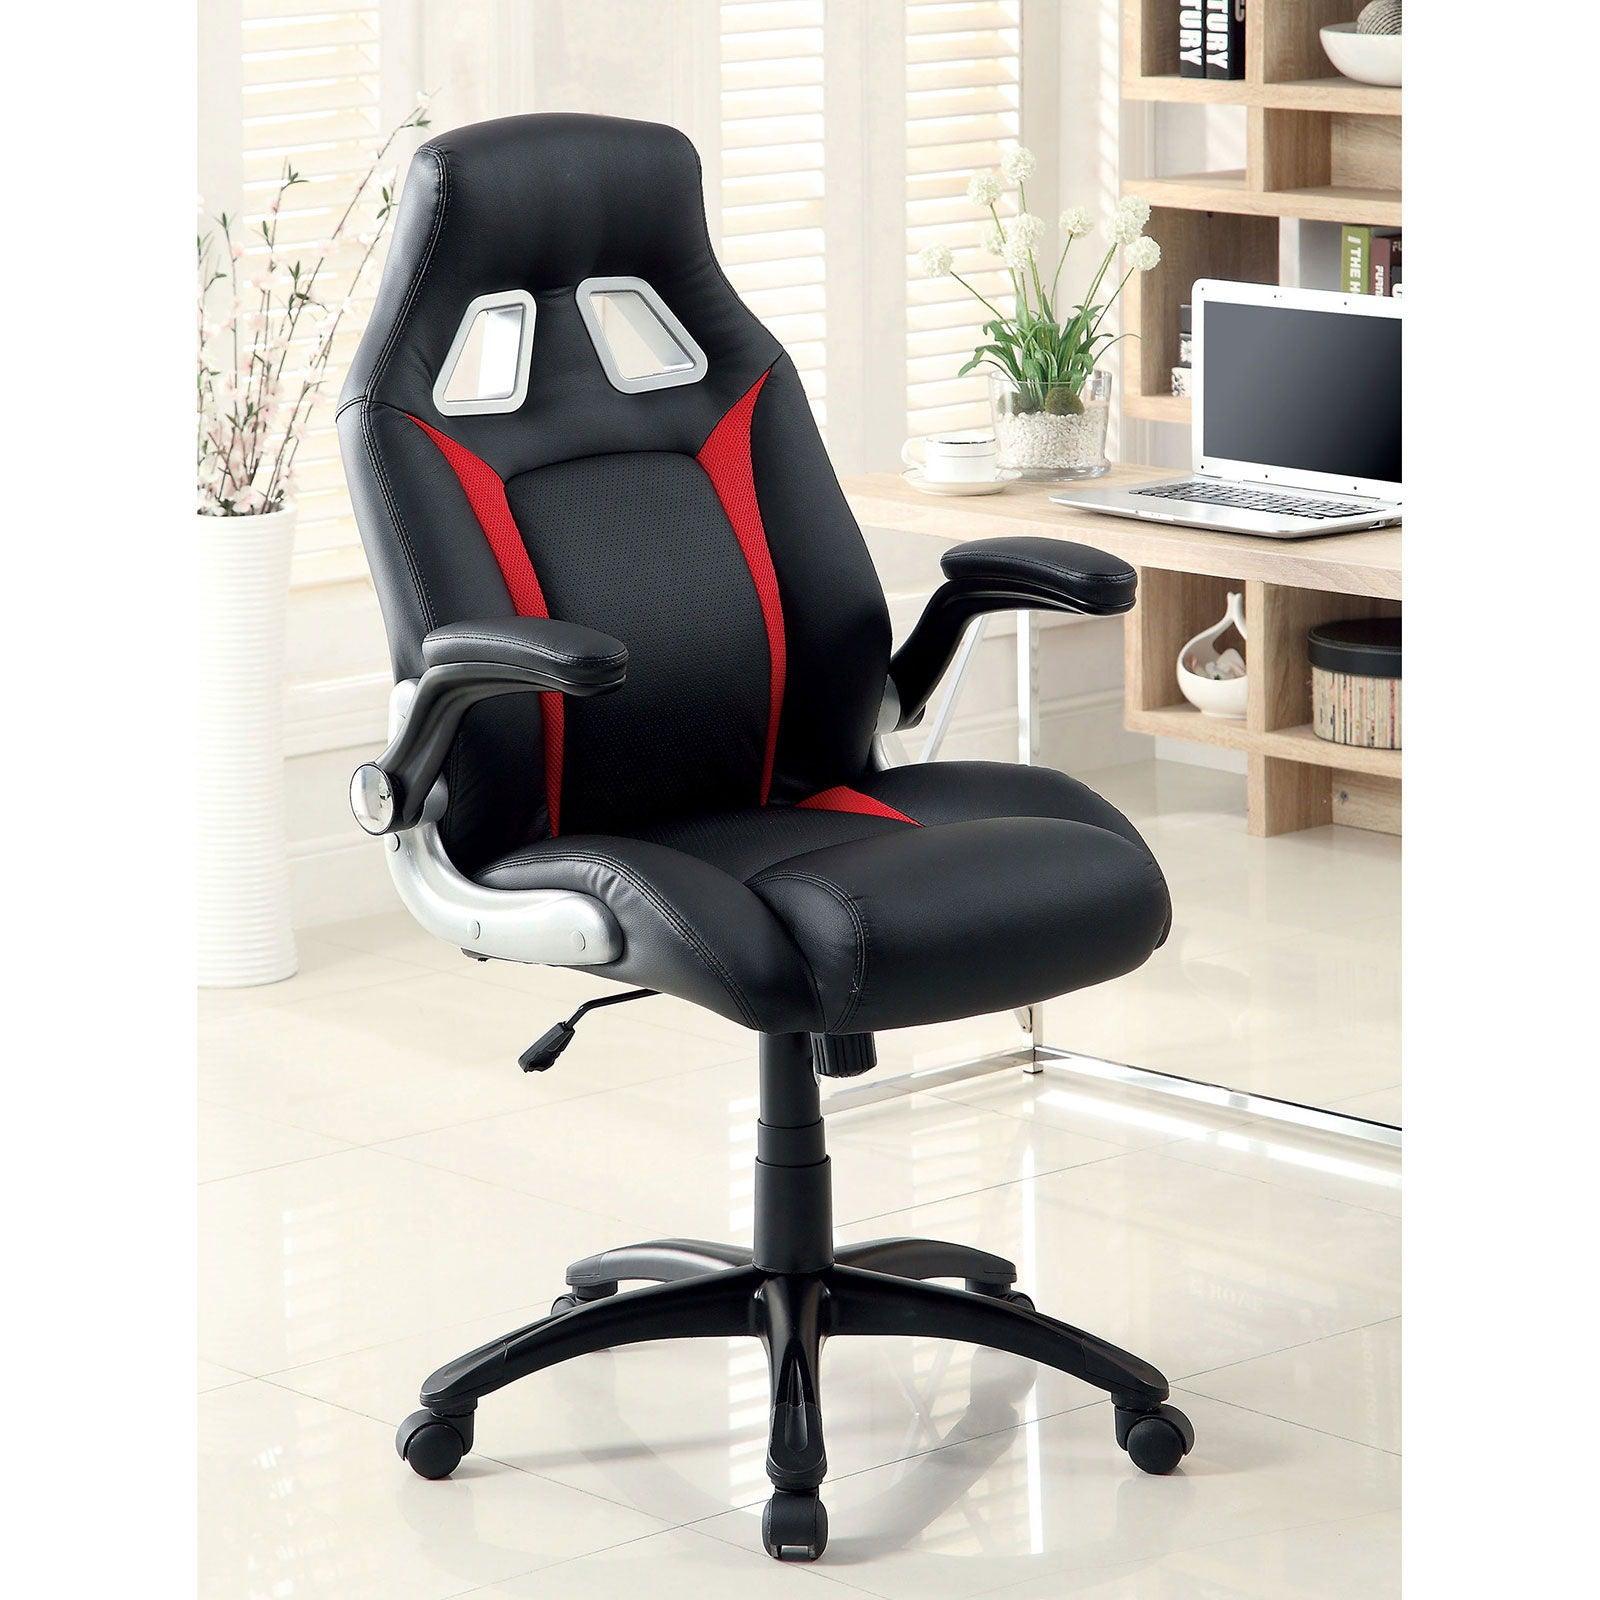 Furniture of America - Argon - Office Chair - Black / Silver / Red - 5th Avenue Furniture